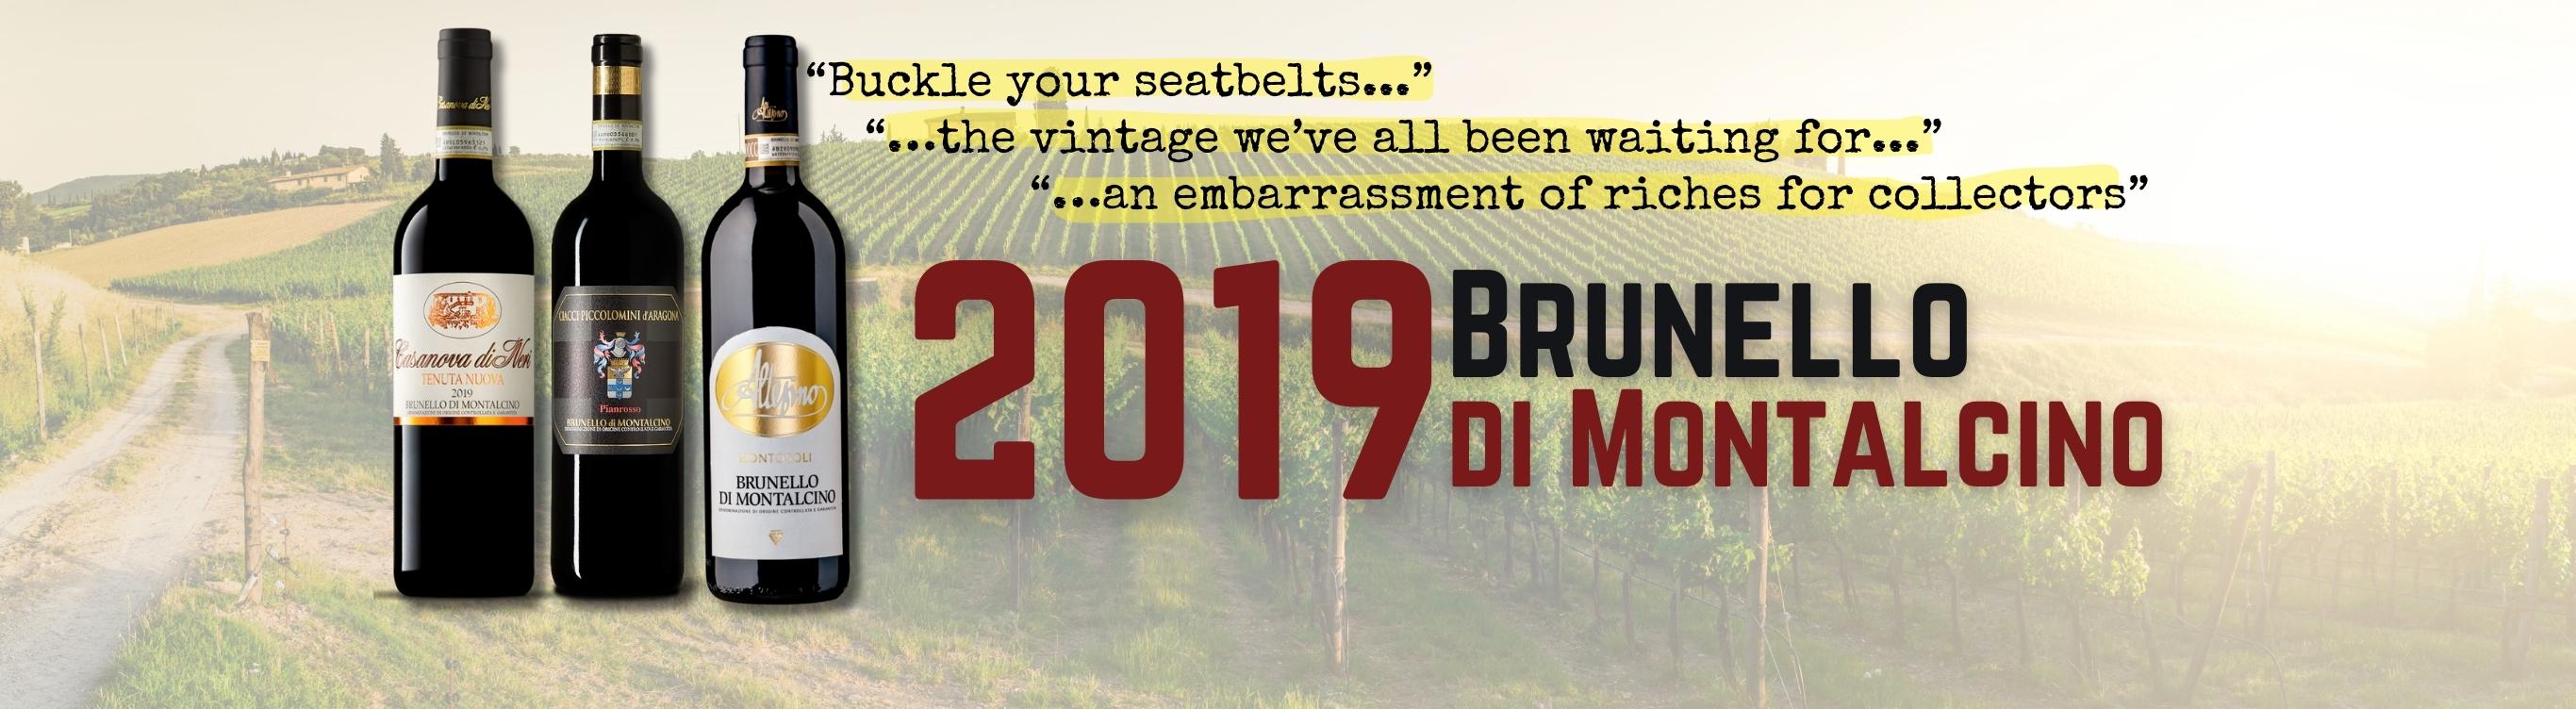 2019 Brunello